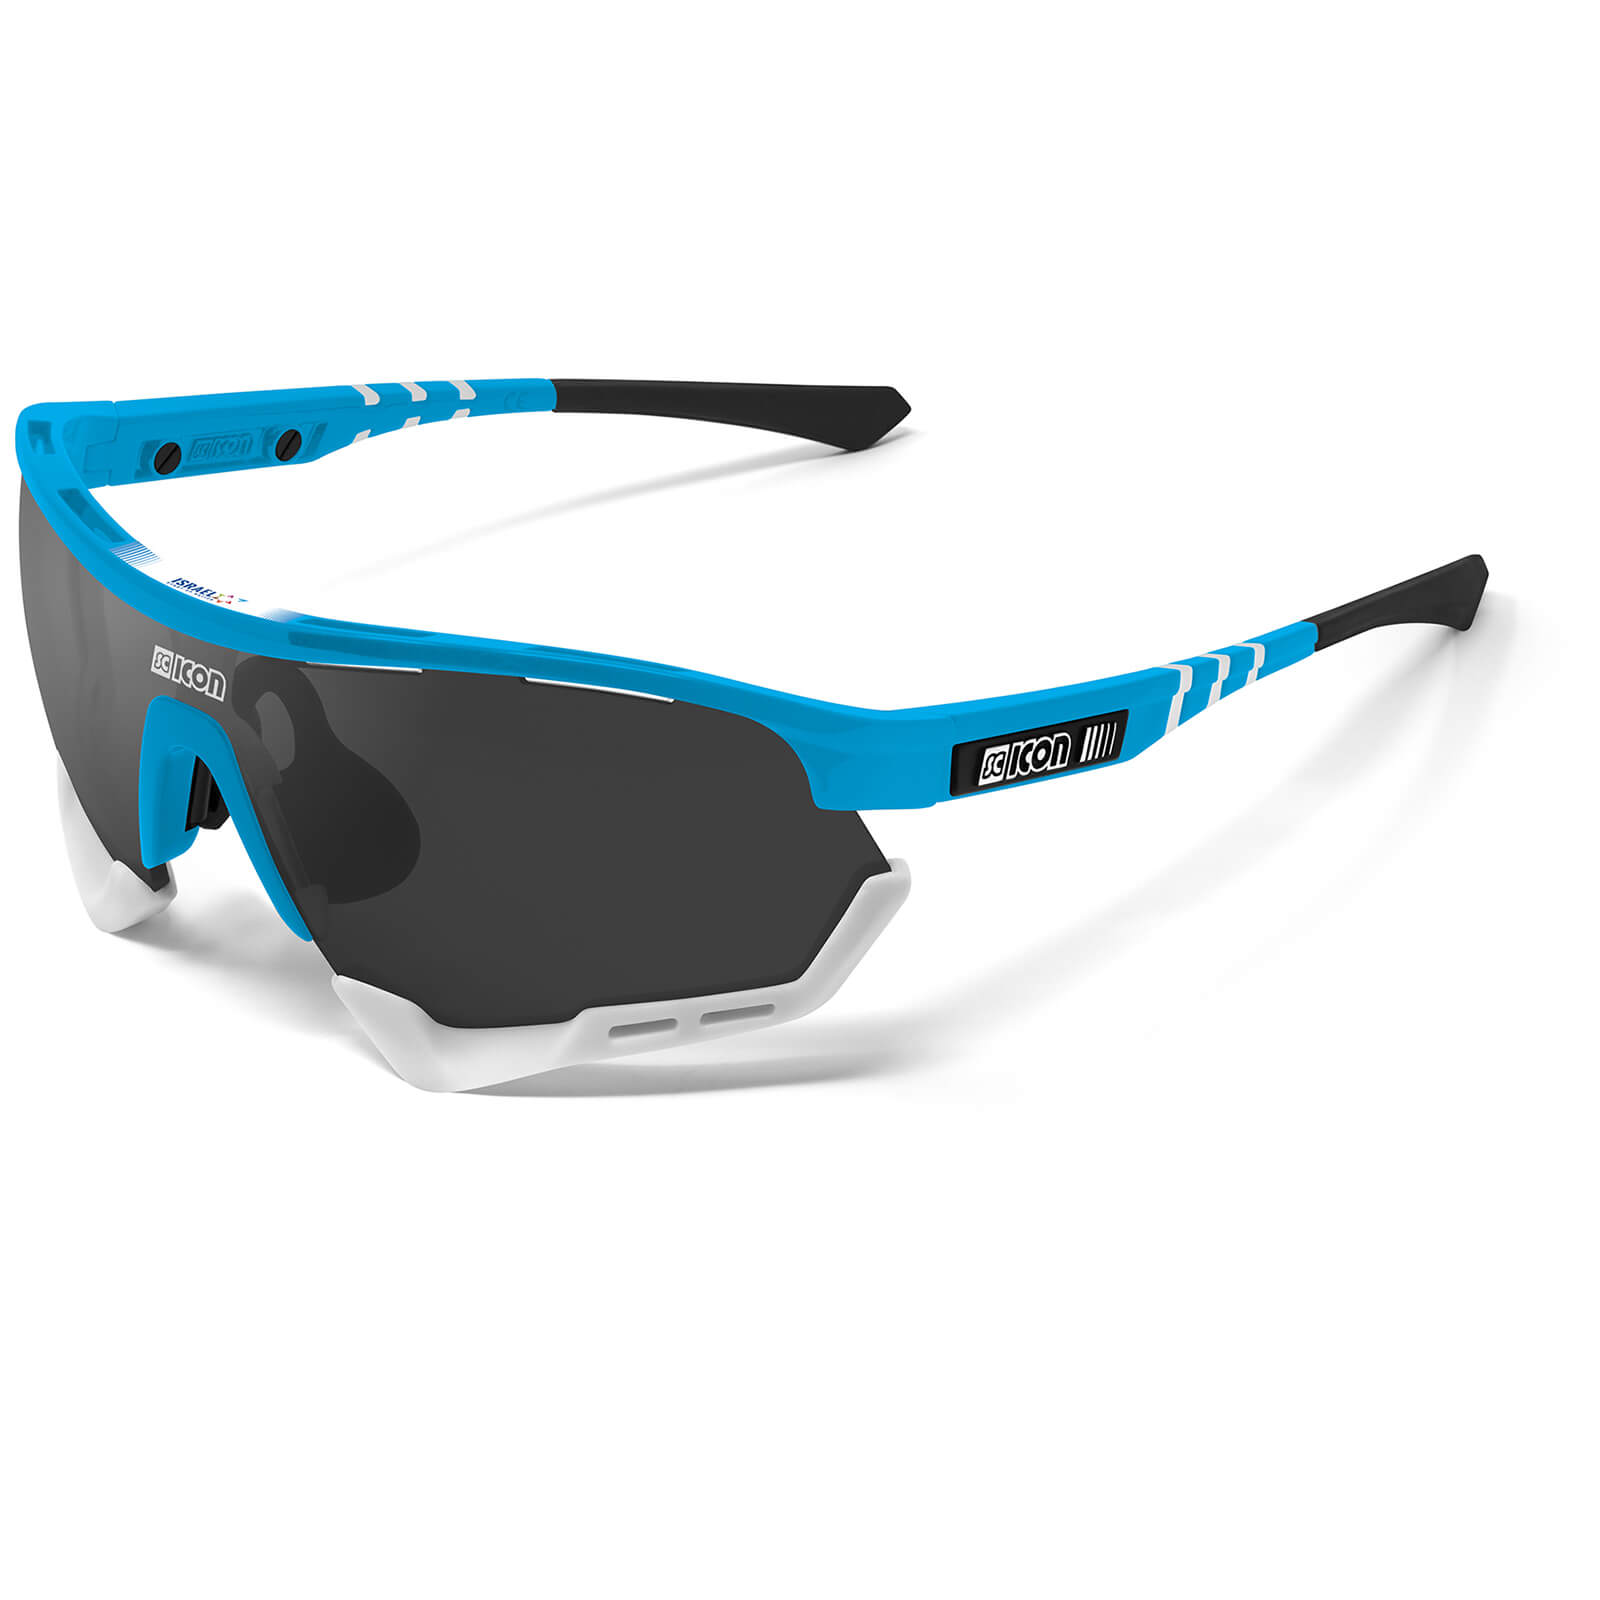 Scicon Aerotech XL Israel Cycling Academy 2020 Edition Sunglasses - Cyan/SCNPP Multilaser Blue